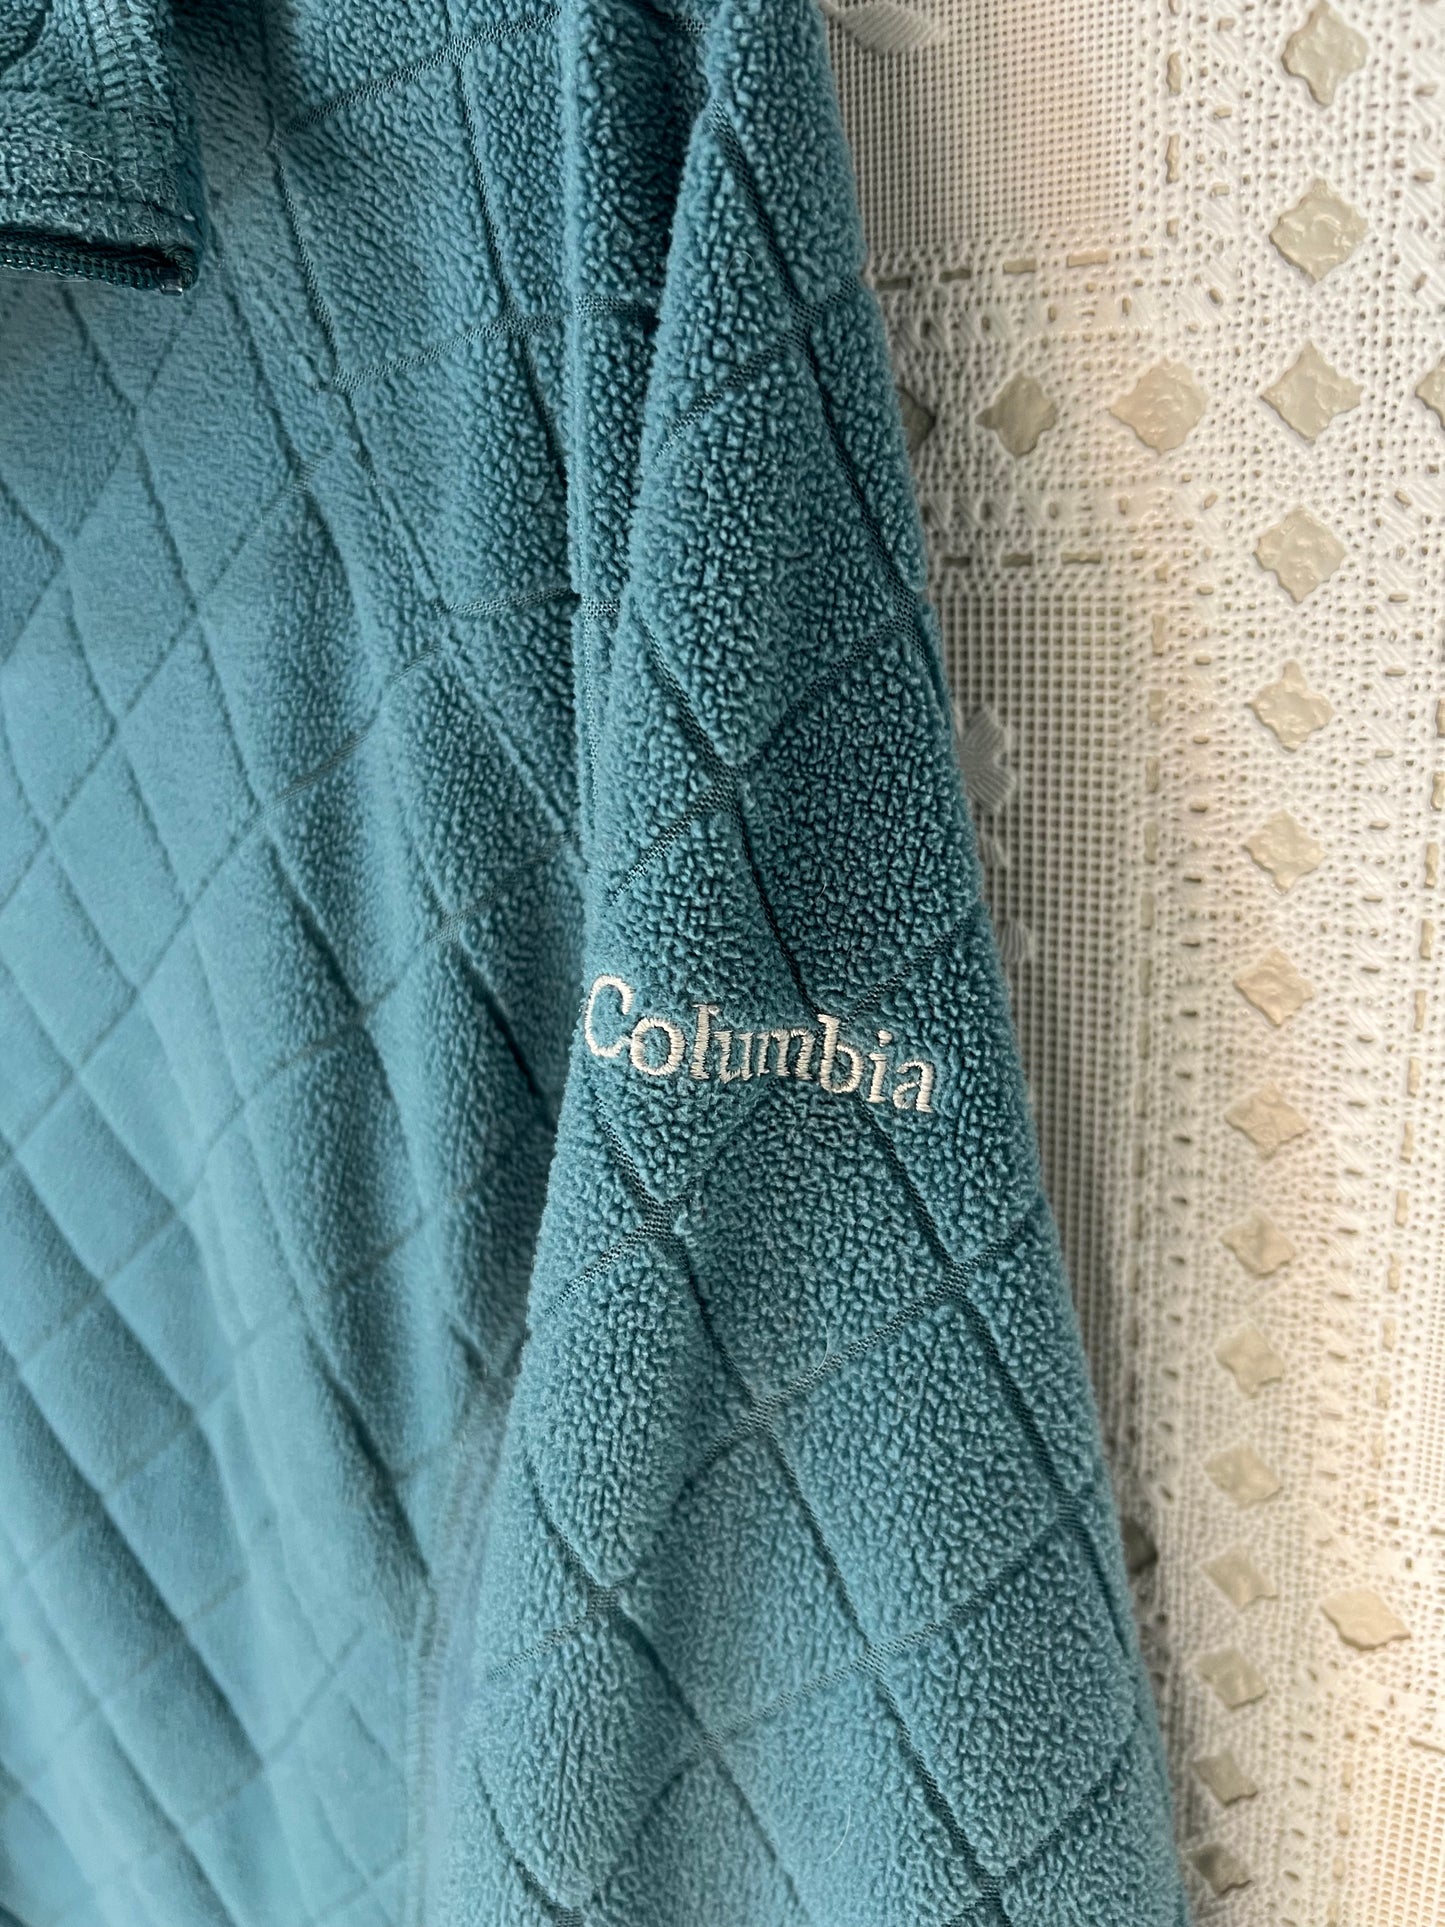 Columbia Women’s fitted fleece - L